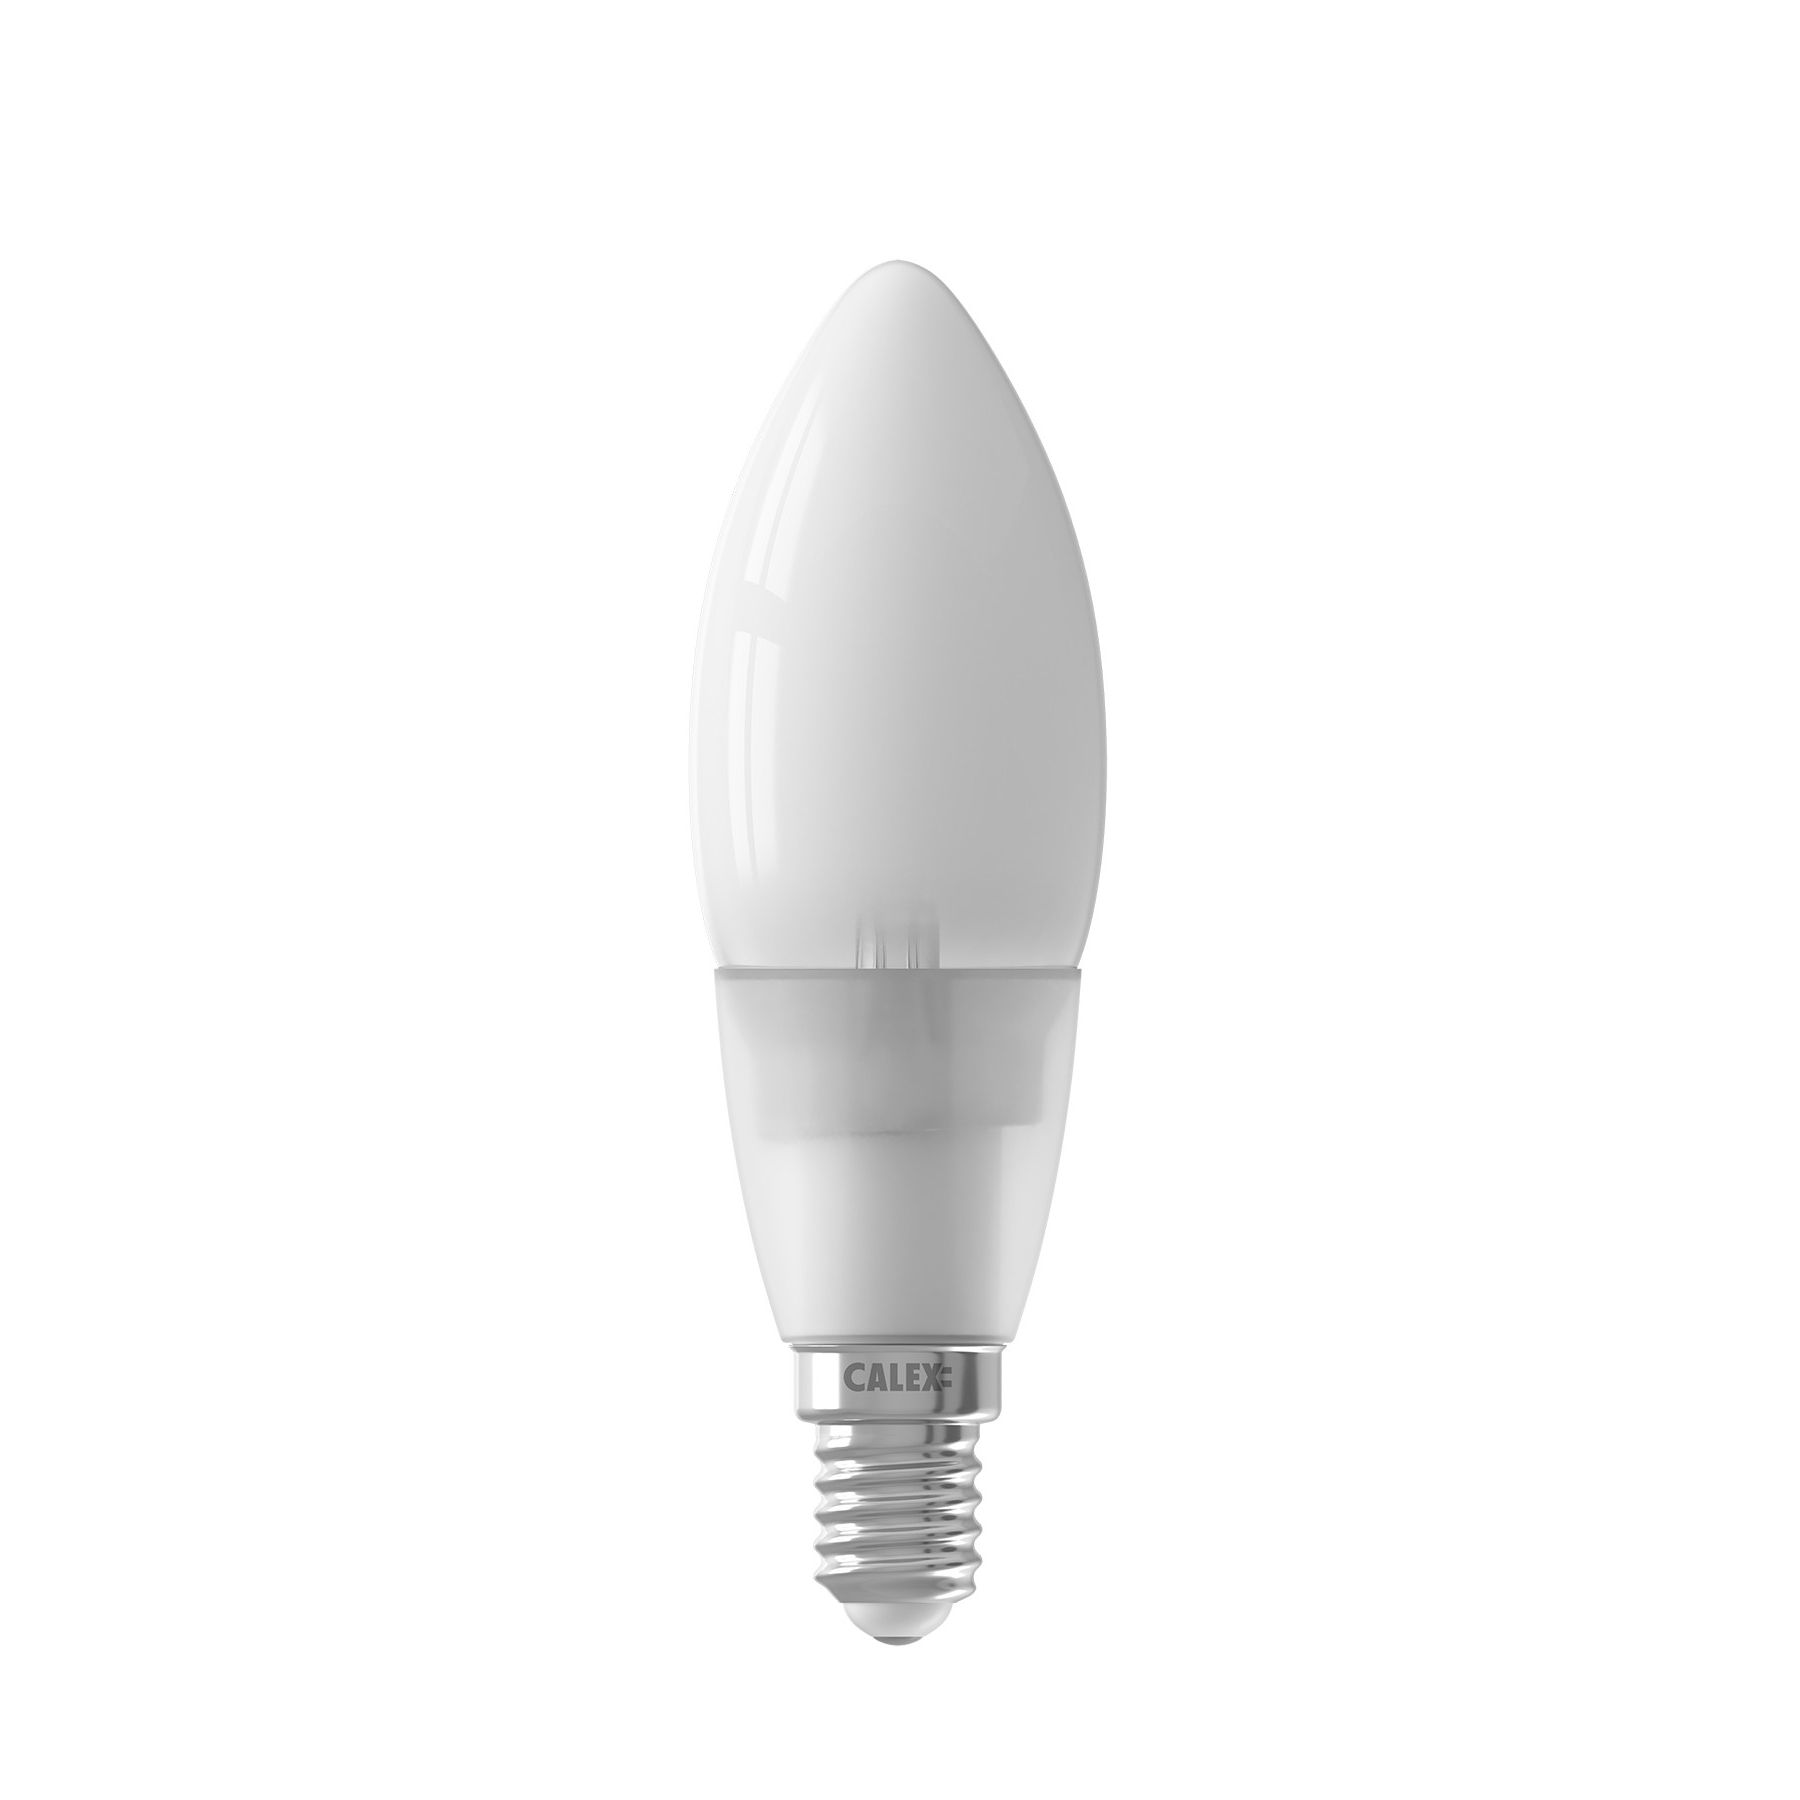 Spruit tolerantie Machu Picchu Calex Smart LED lamp - Ø 3,5 x 11,2 cm - E14 - 4,5W - dimfunctie via app -  2200 tot 4000K - white ambiance | Lichtkoning